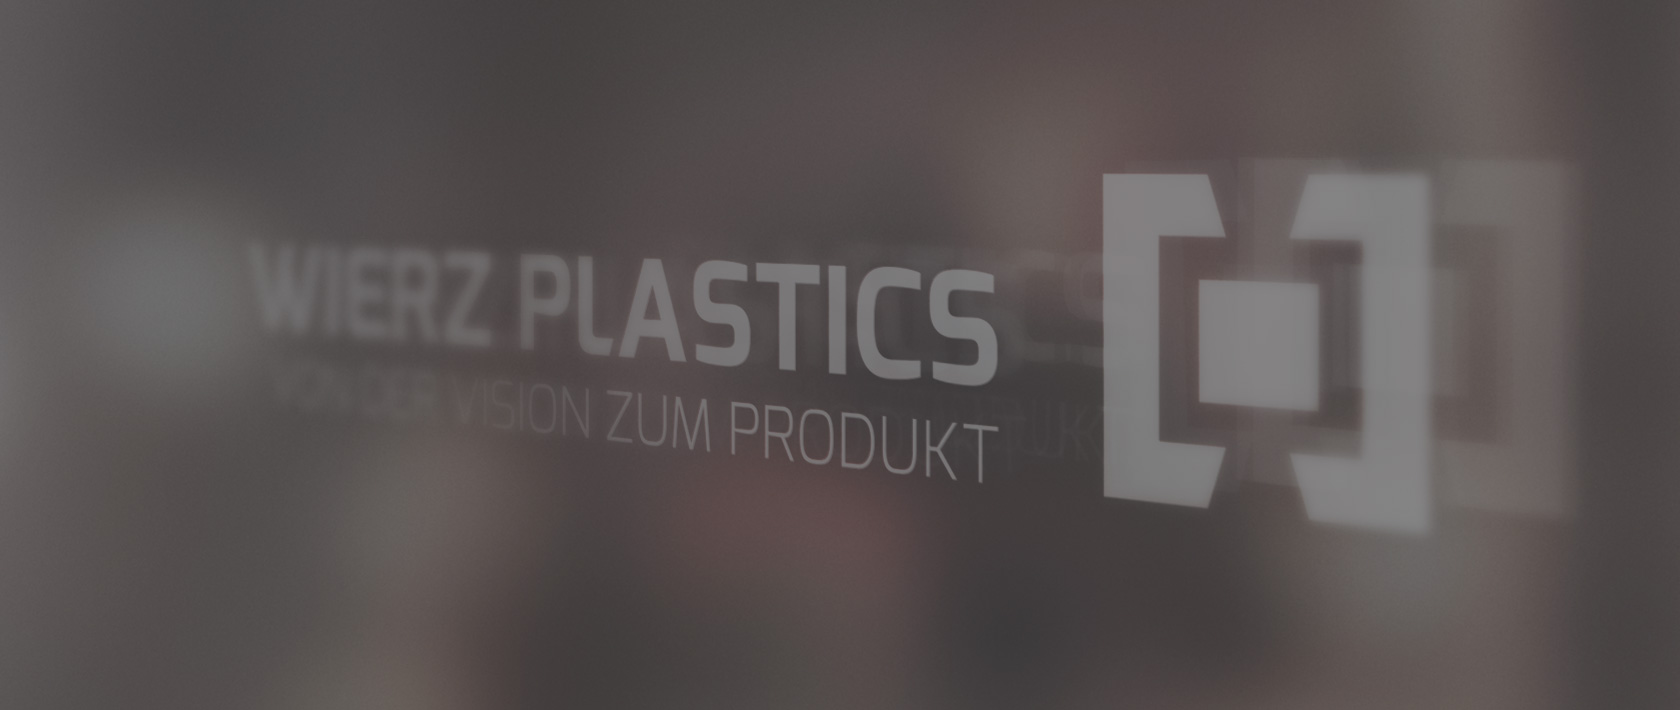 Corporate Design Wierz Plastics